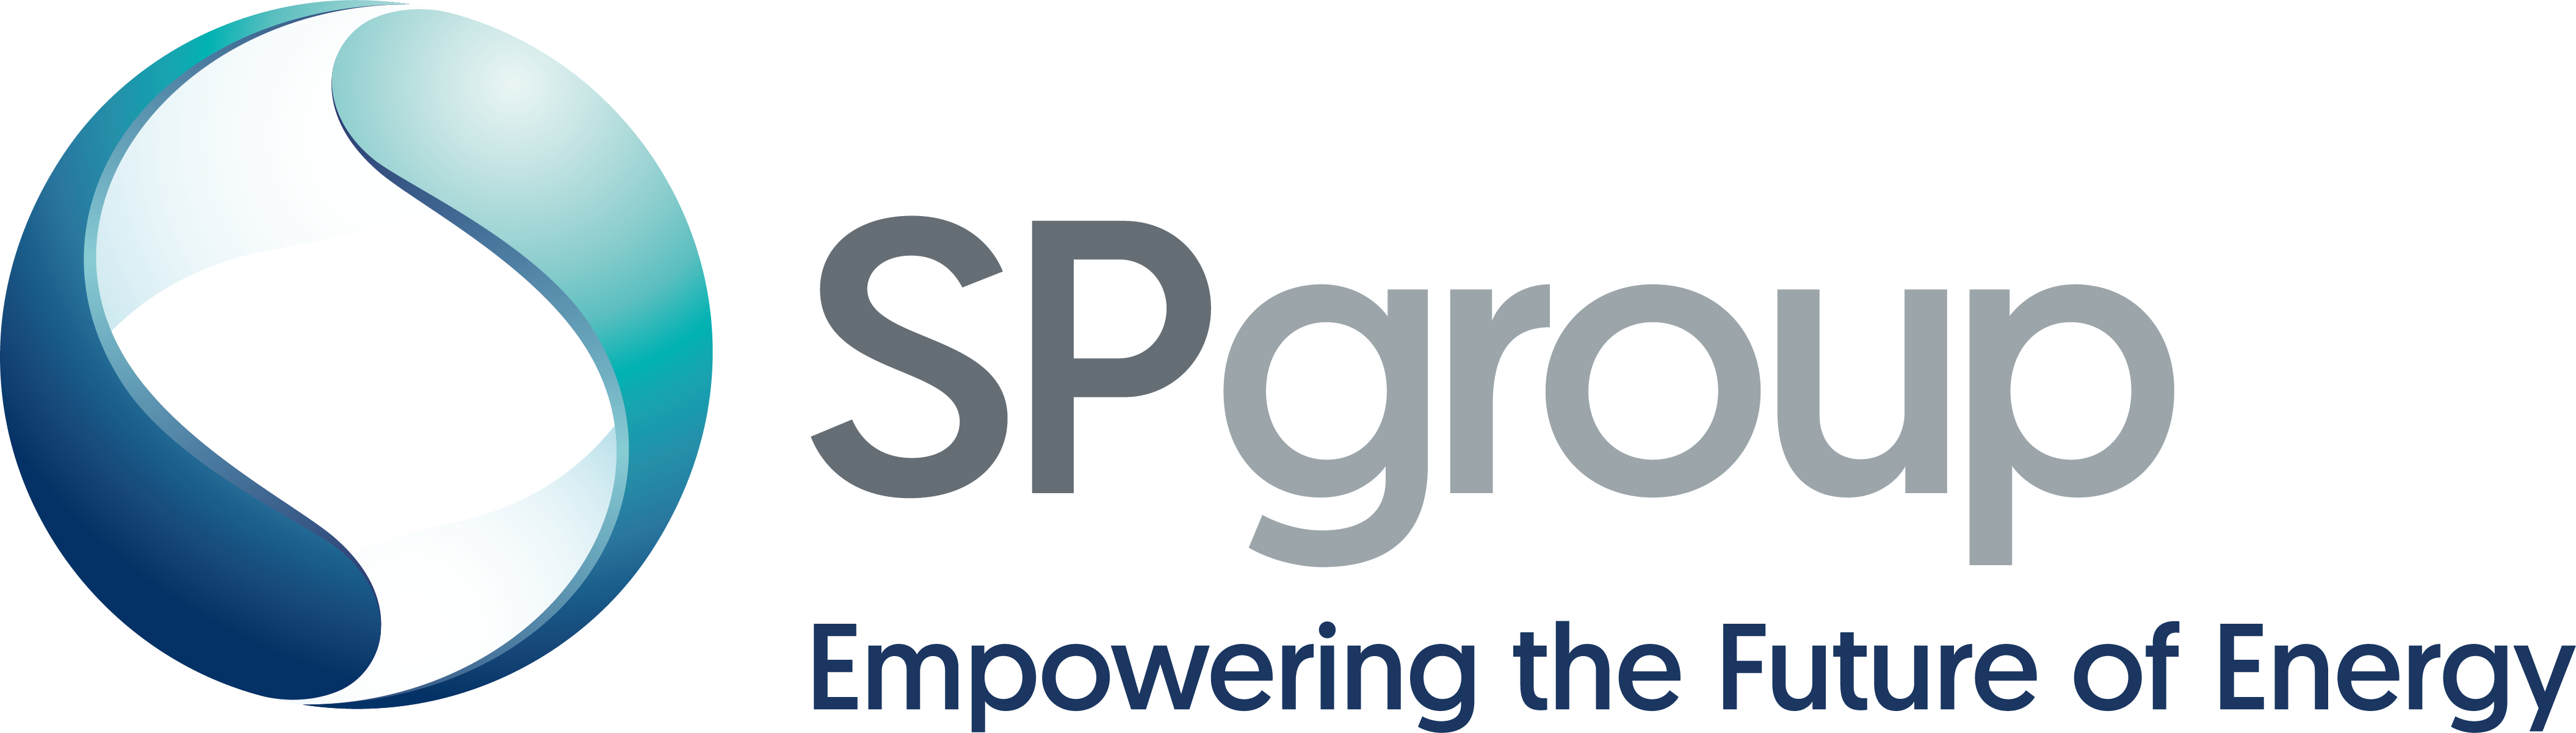 SP group logo